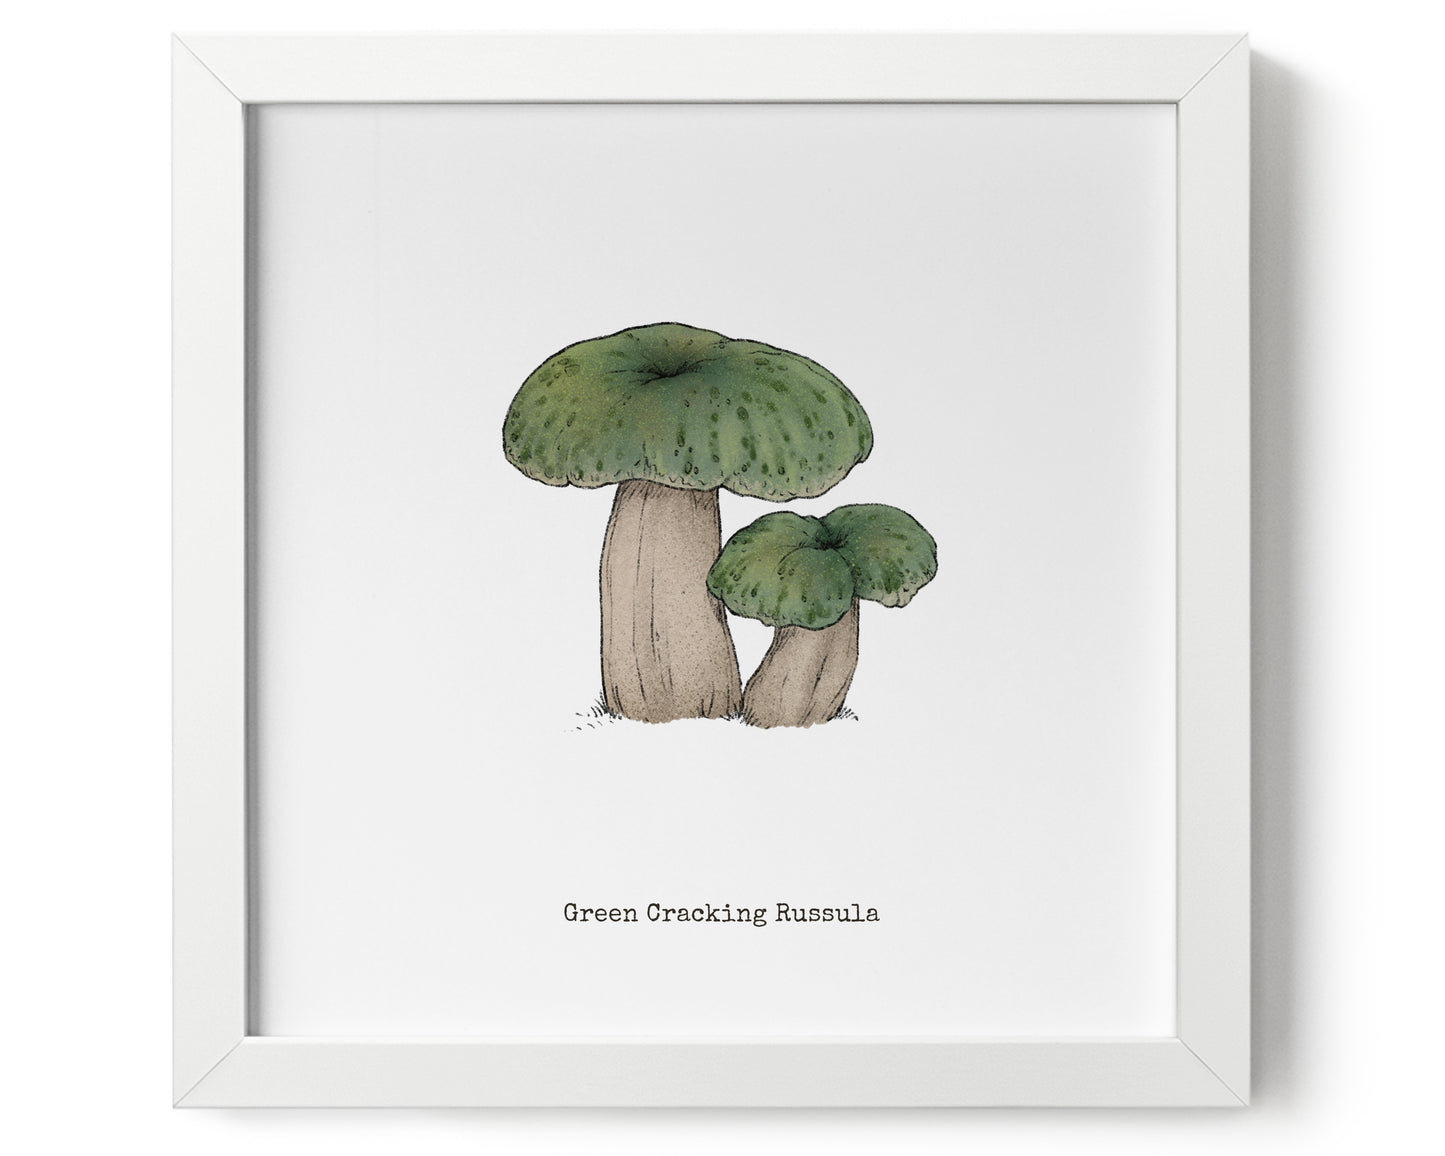 "Green Crackling Russula" by Catherine Hébert - Green Crackling Russula Mushroom Art Print - 9"x9" size